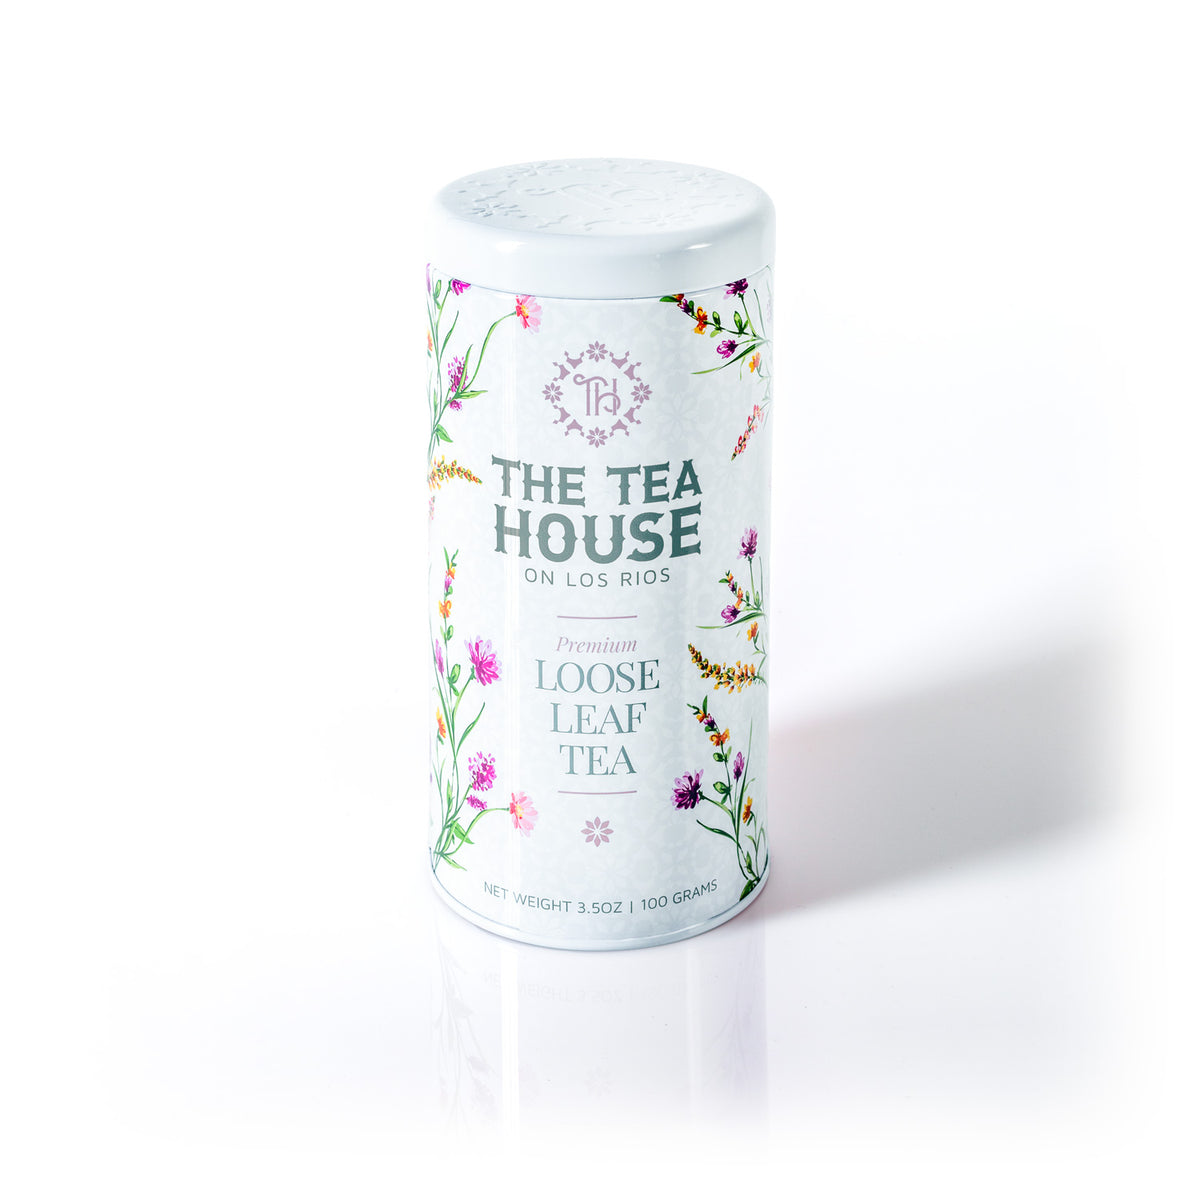 The Tea House on Los Rios proudly presents a 100g Loose Leaf Tea Tin